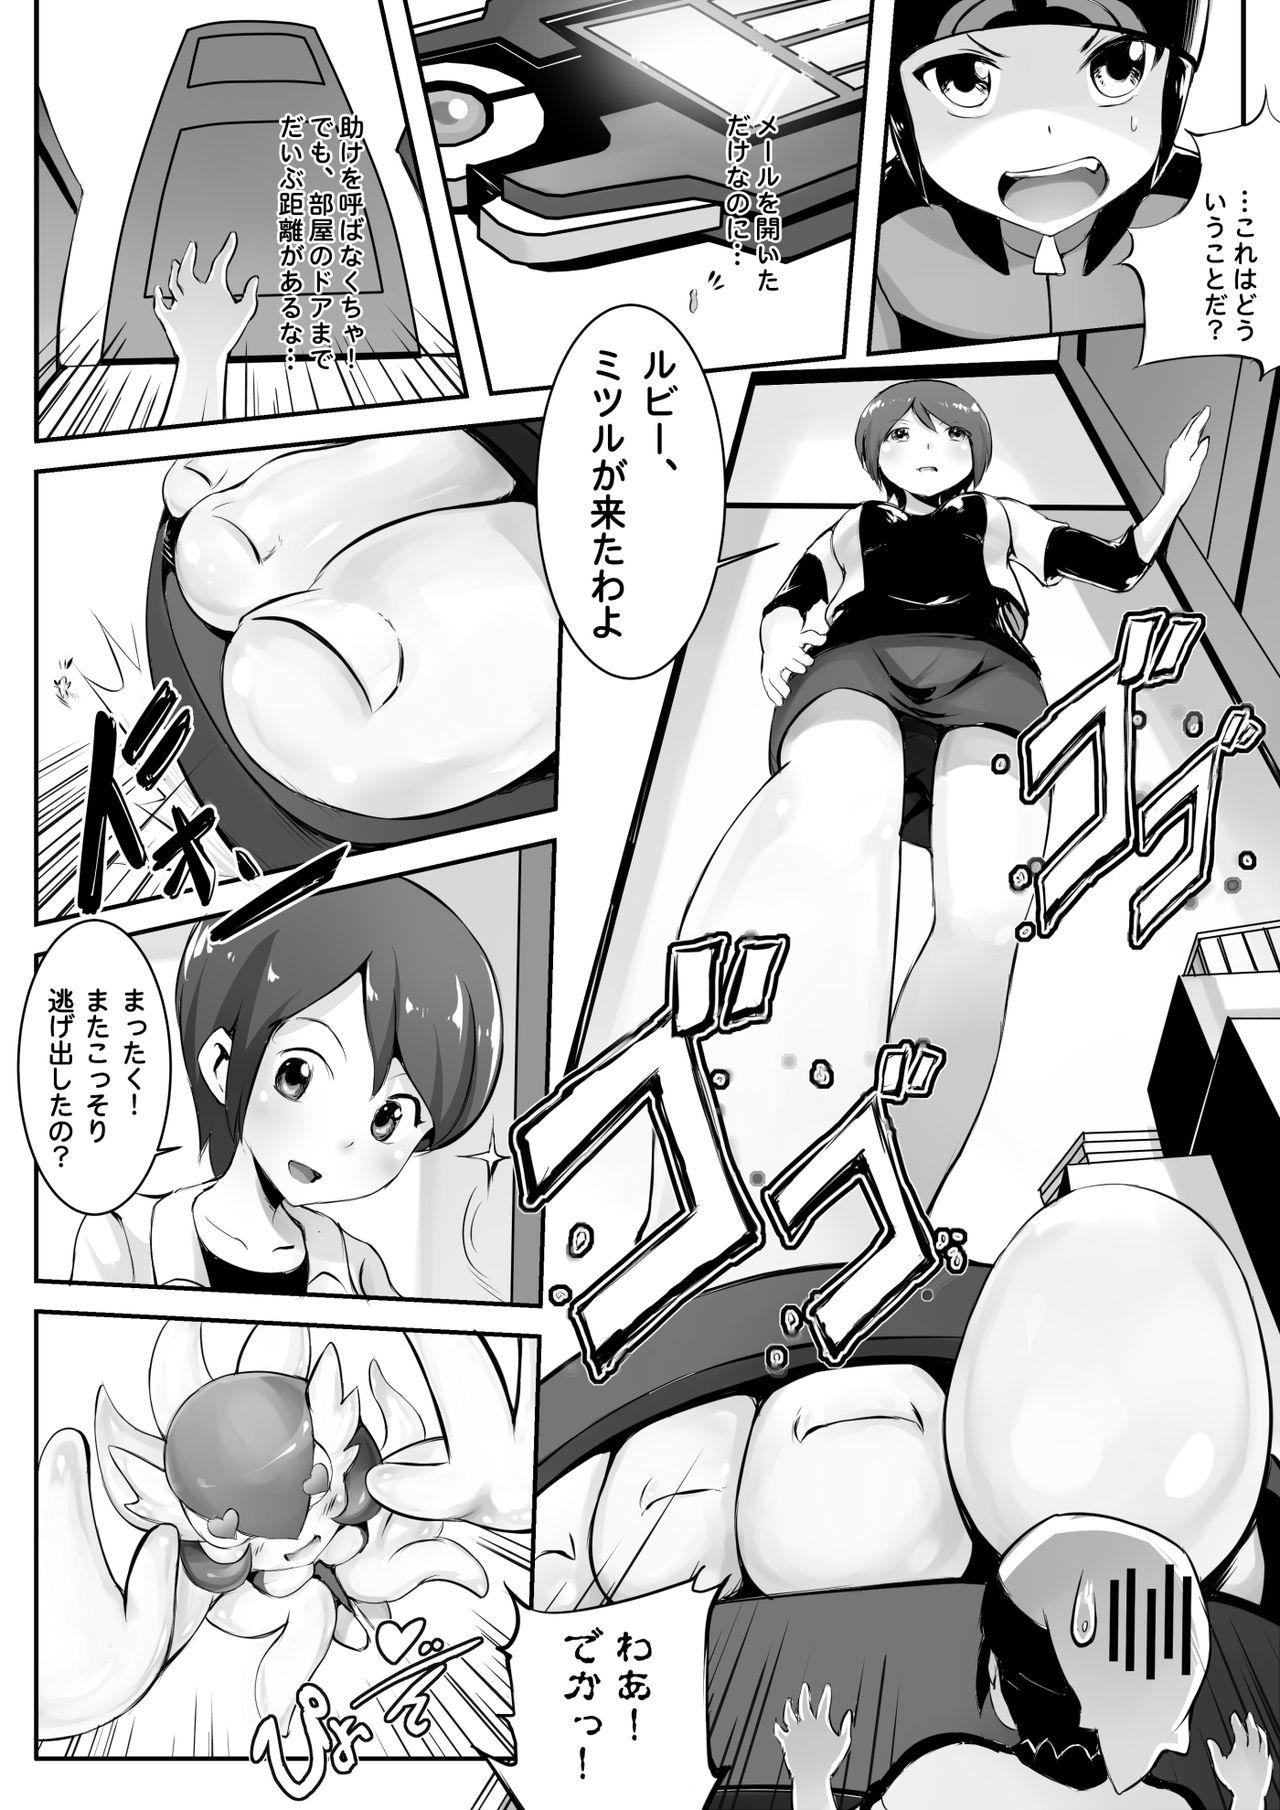 Dirty Pokemon GS/ BEGIN - Pokemon Toilet - Page 2